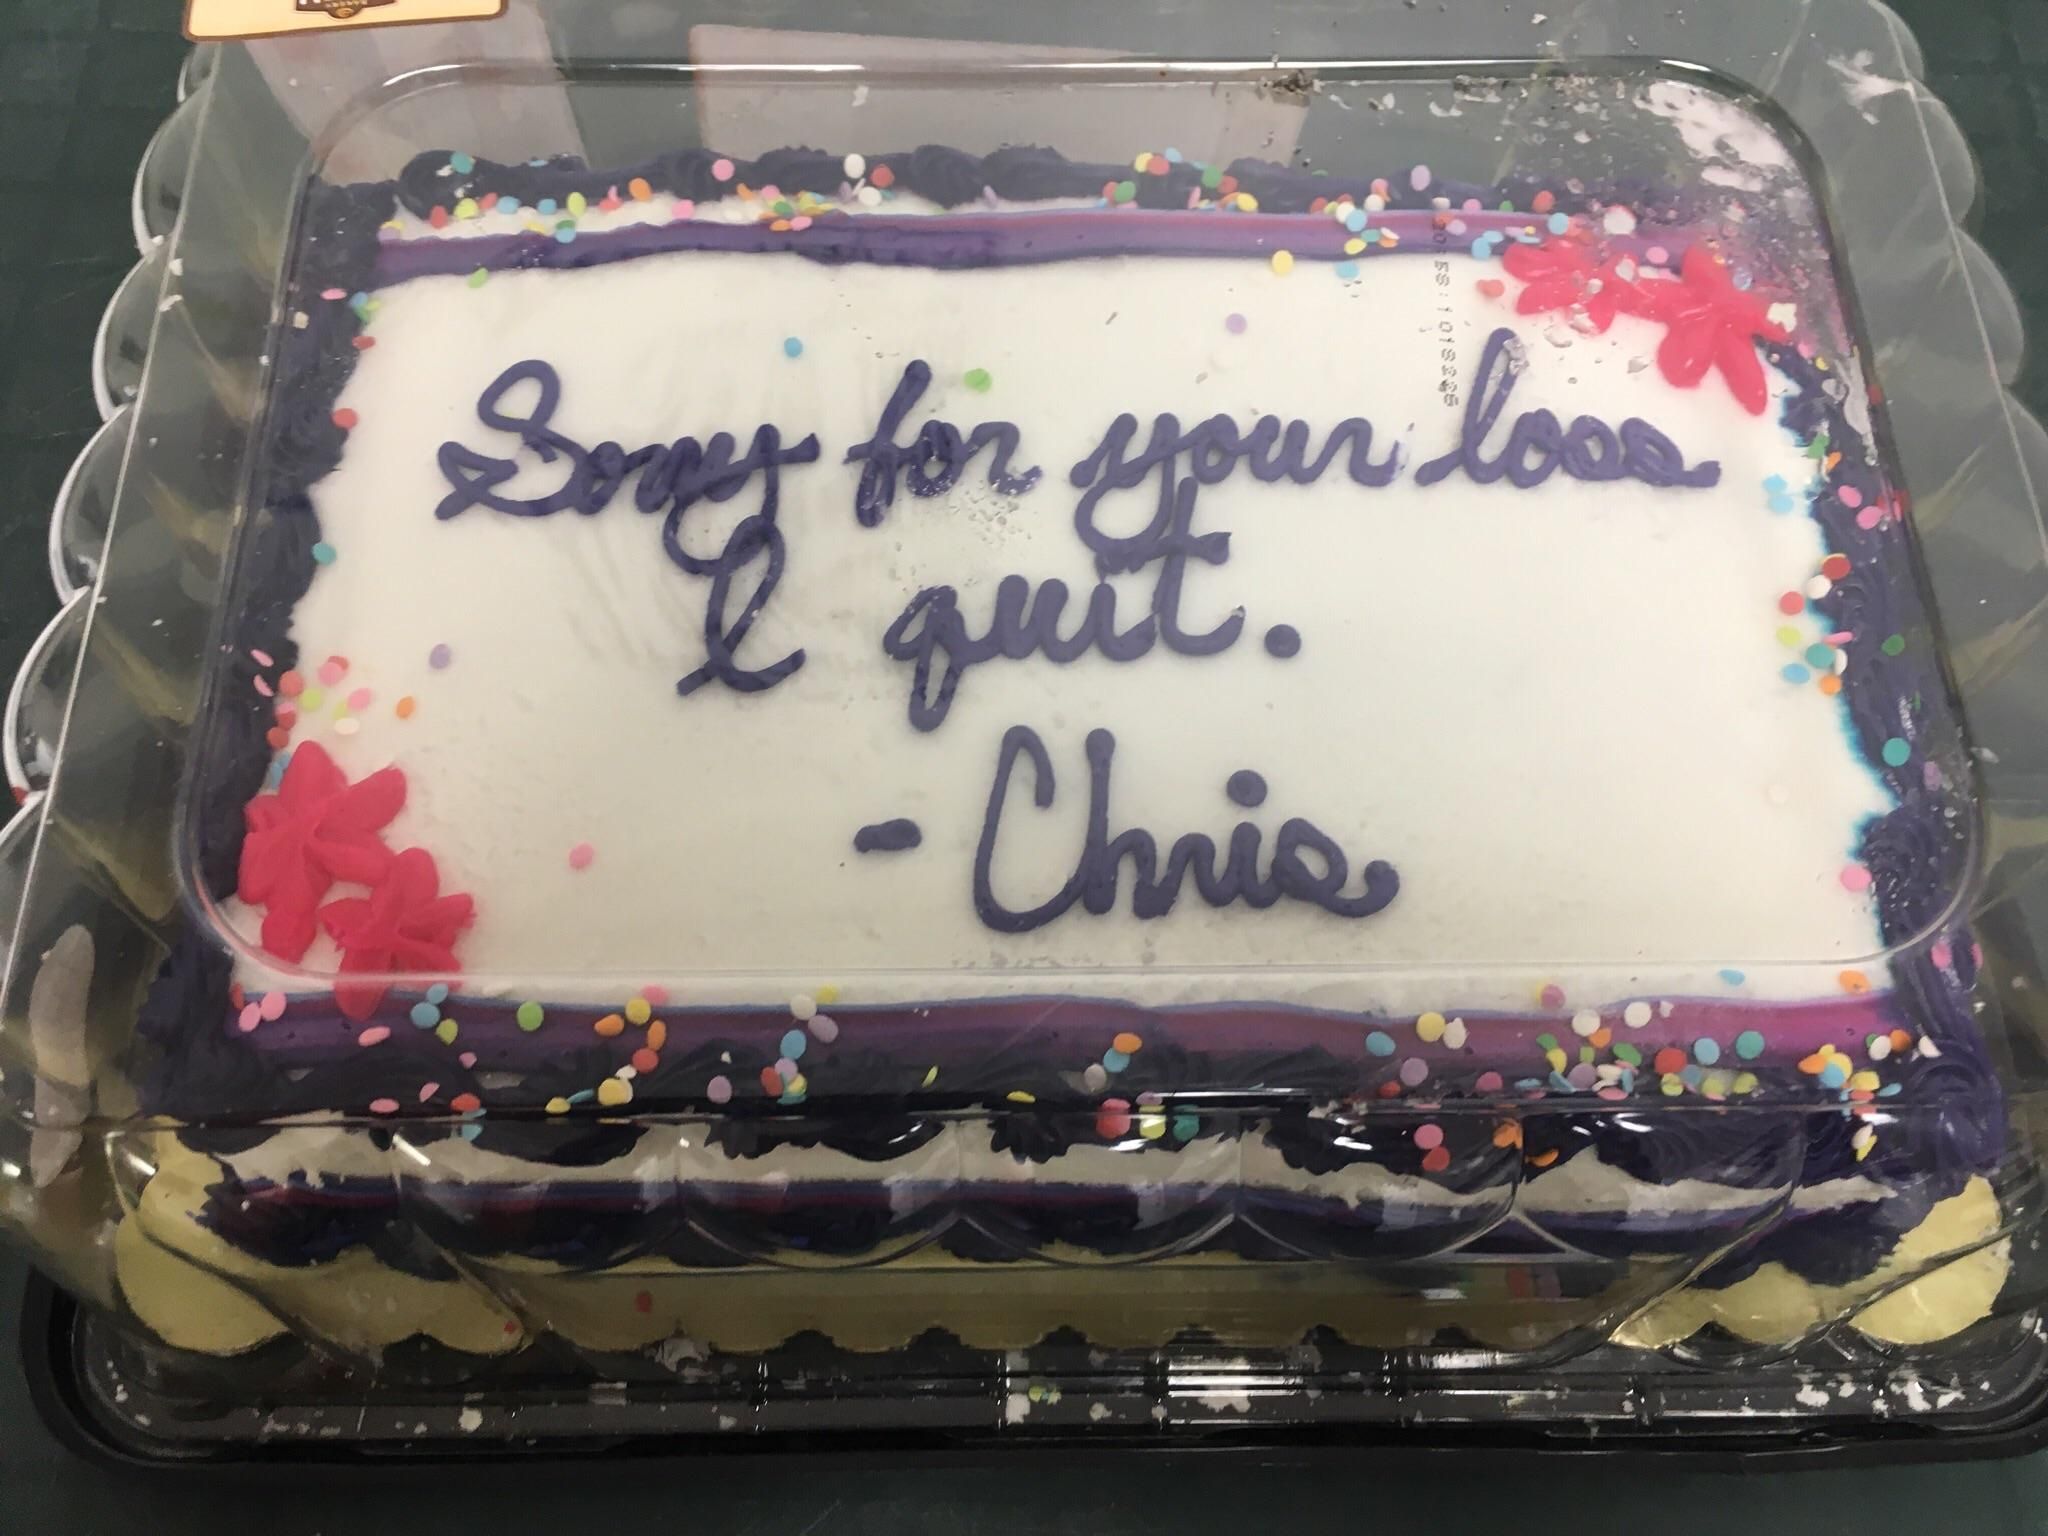 My coworker finally had enough...